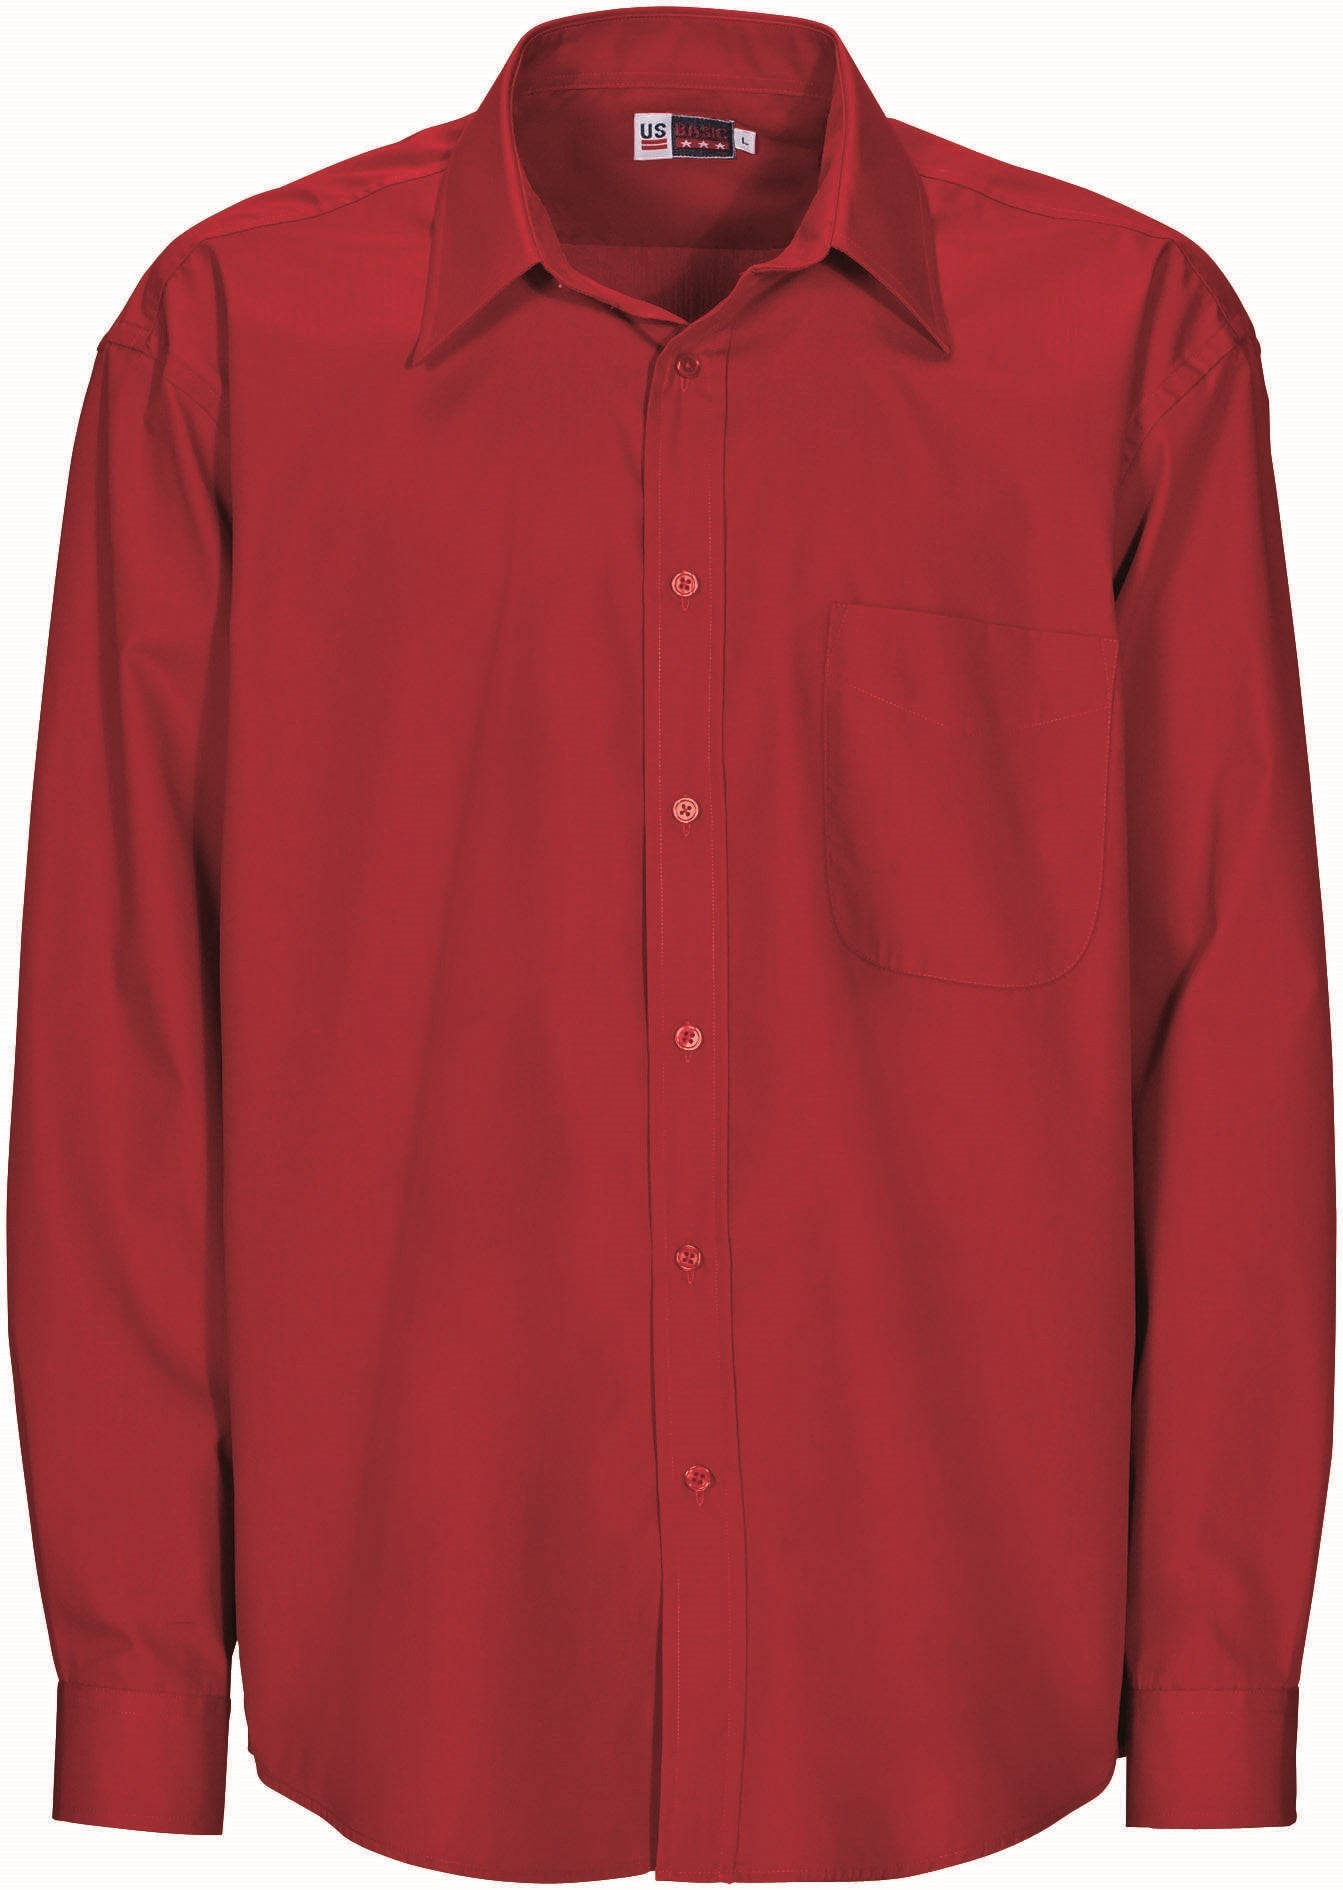 Mens Long Sleeve Washington Shirt - Red